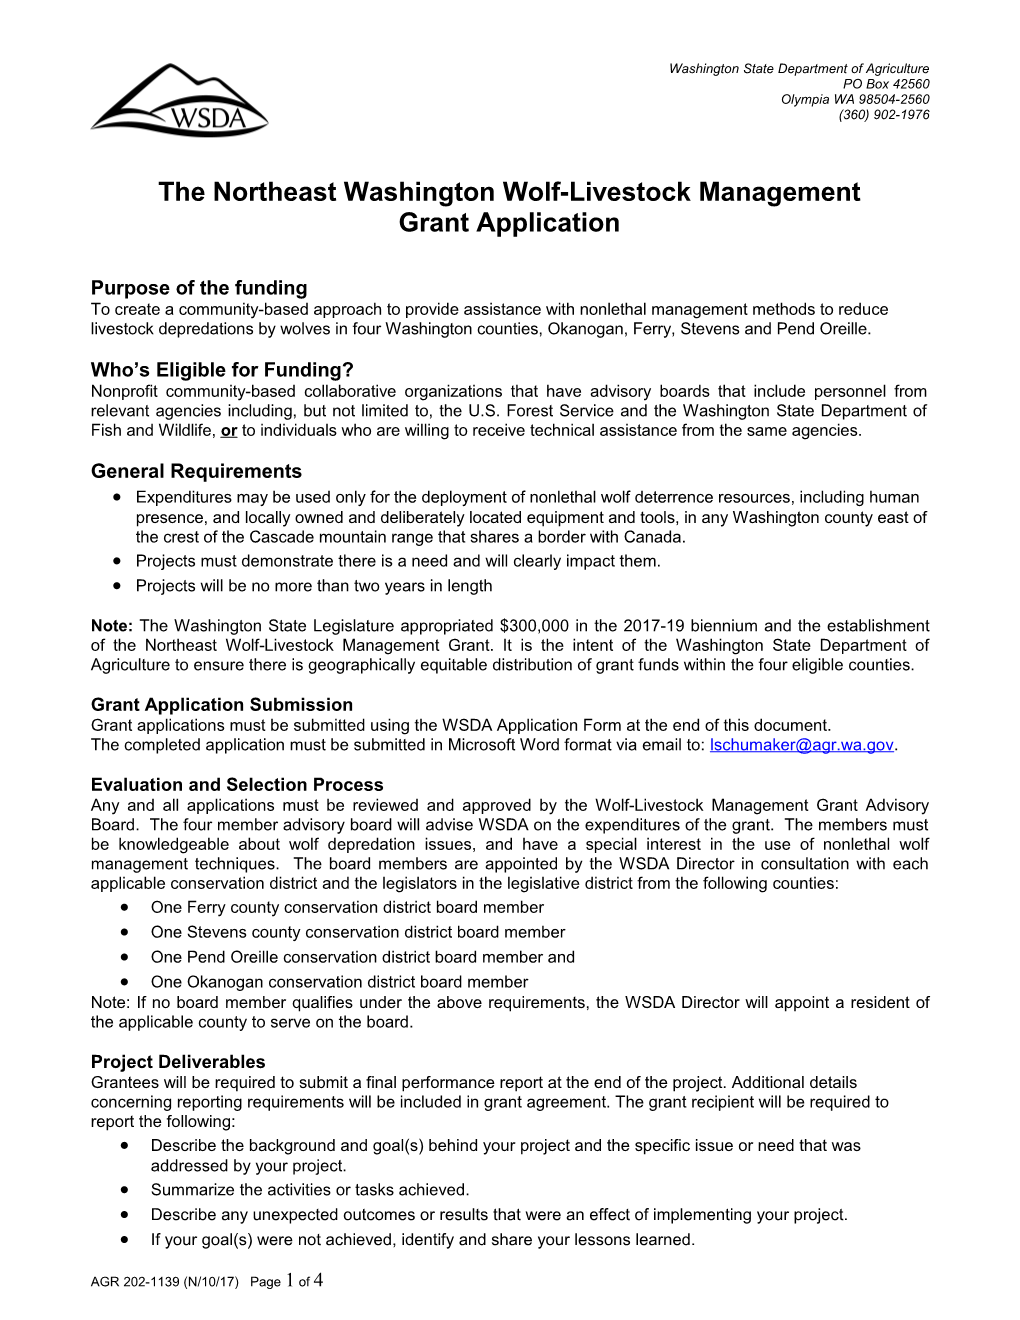 The Northeast Washington Wolf-Livestock Management